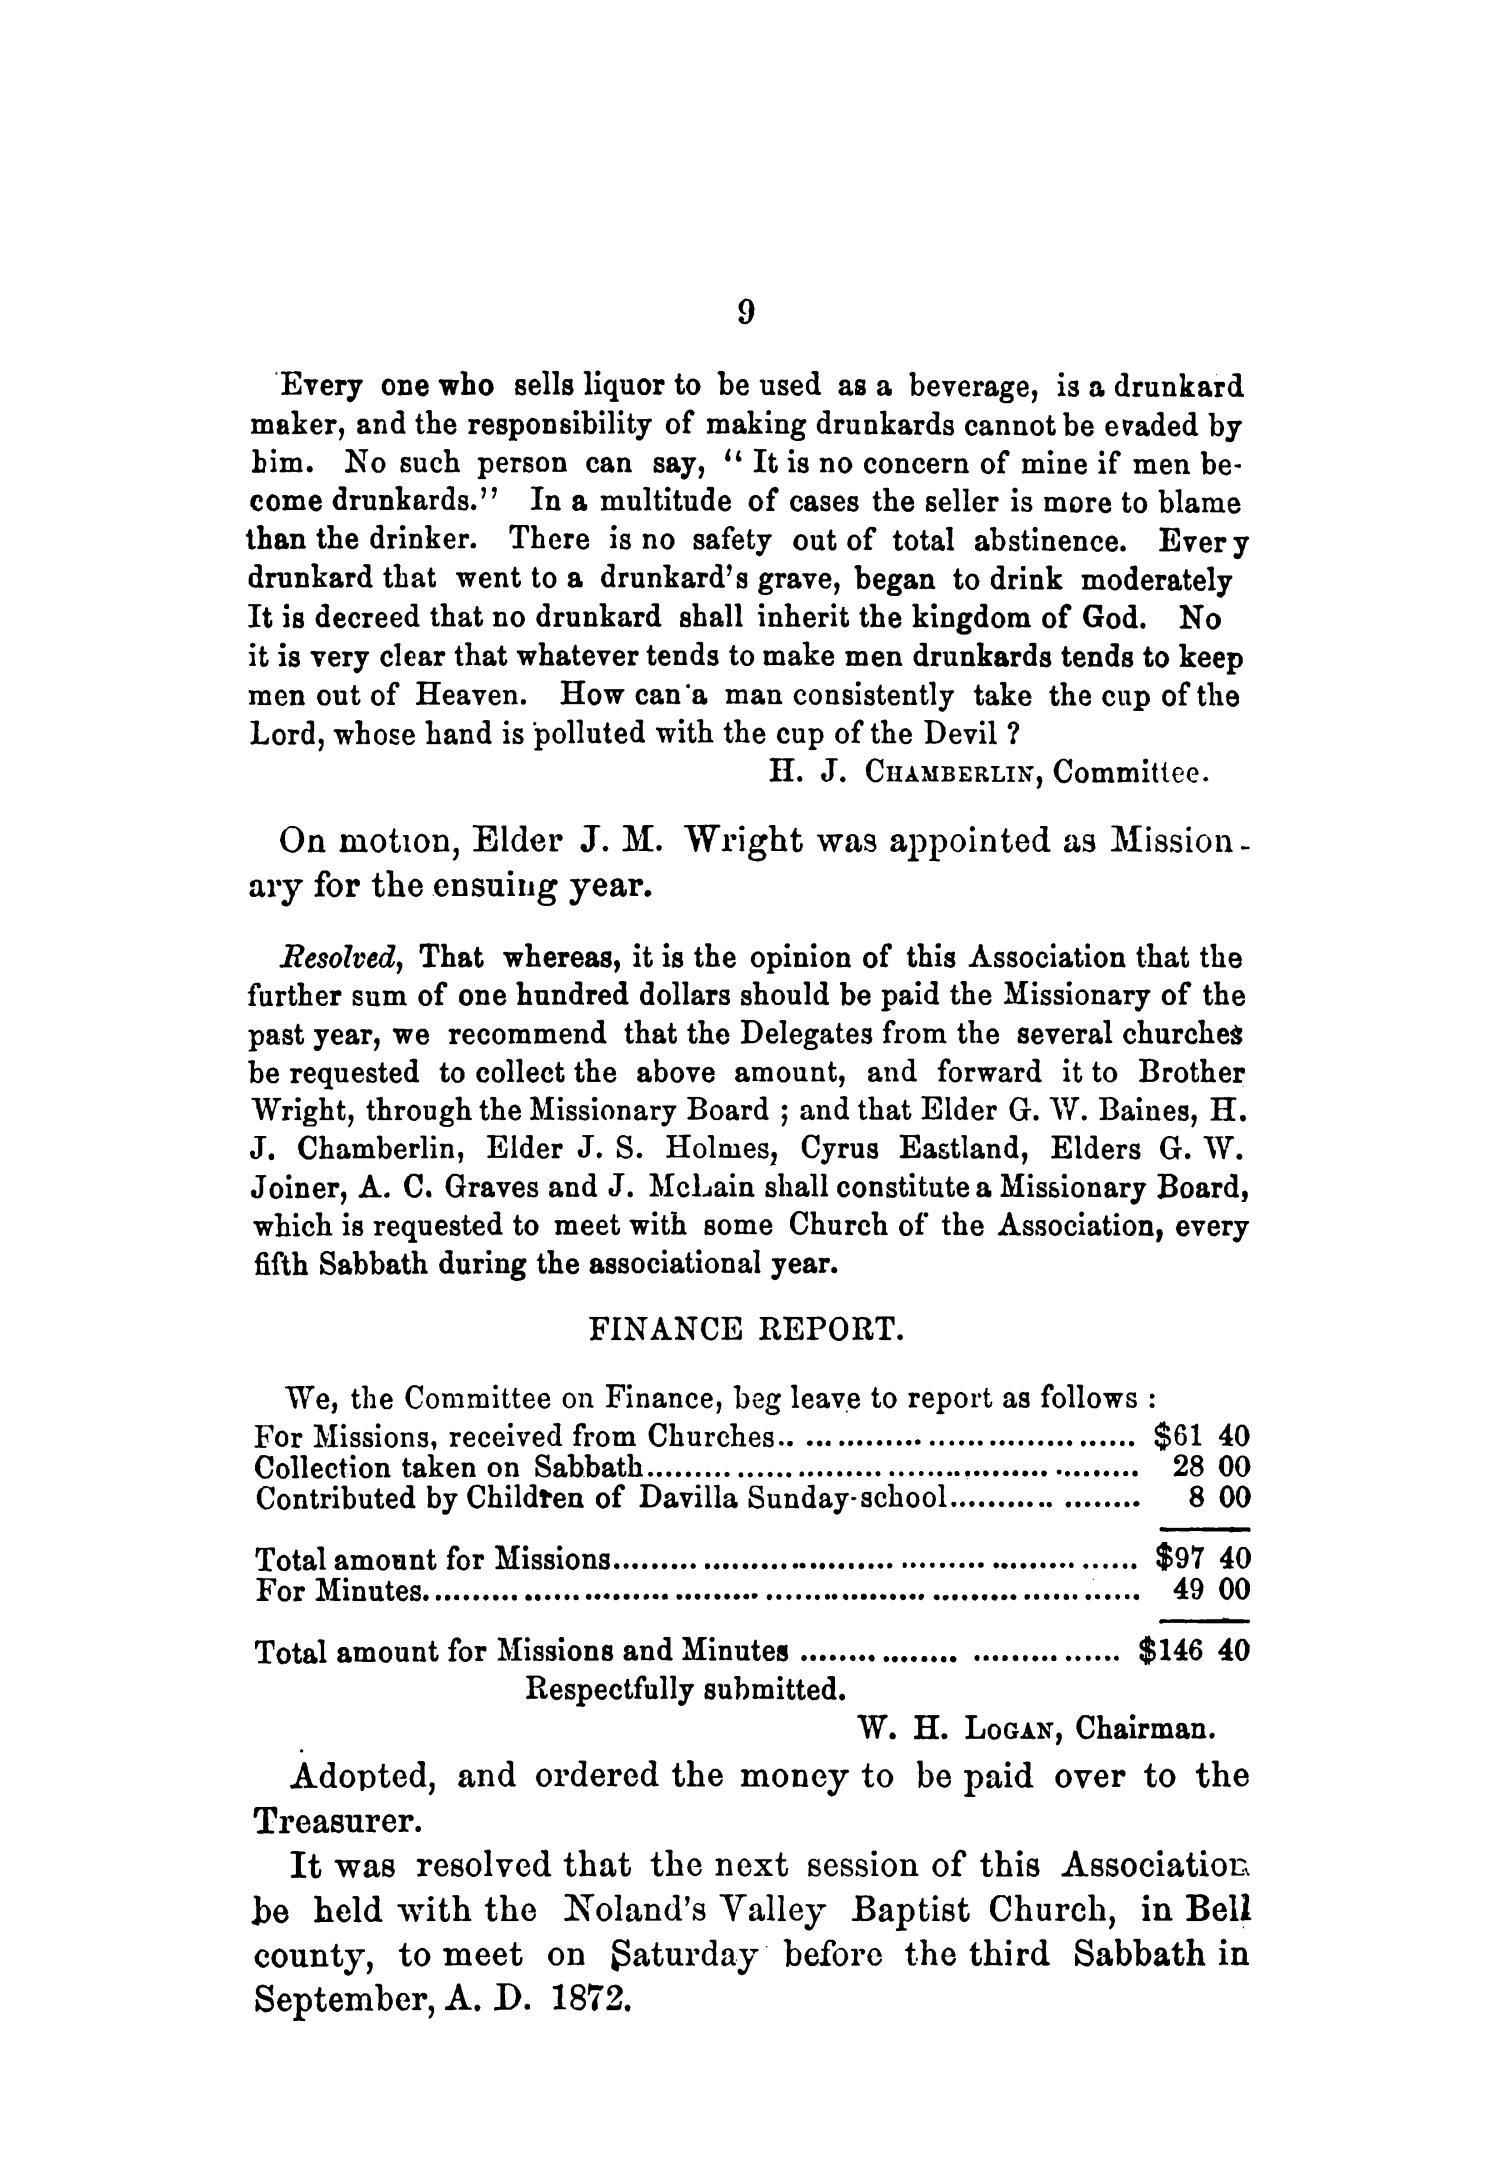 Minutes of the Leon River Baptist Association, 1871
                                                
                                                    9
                                                